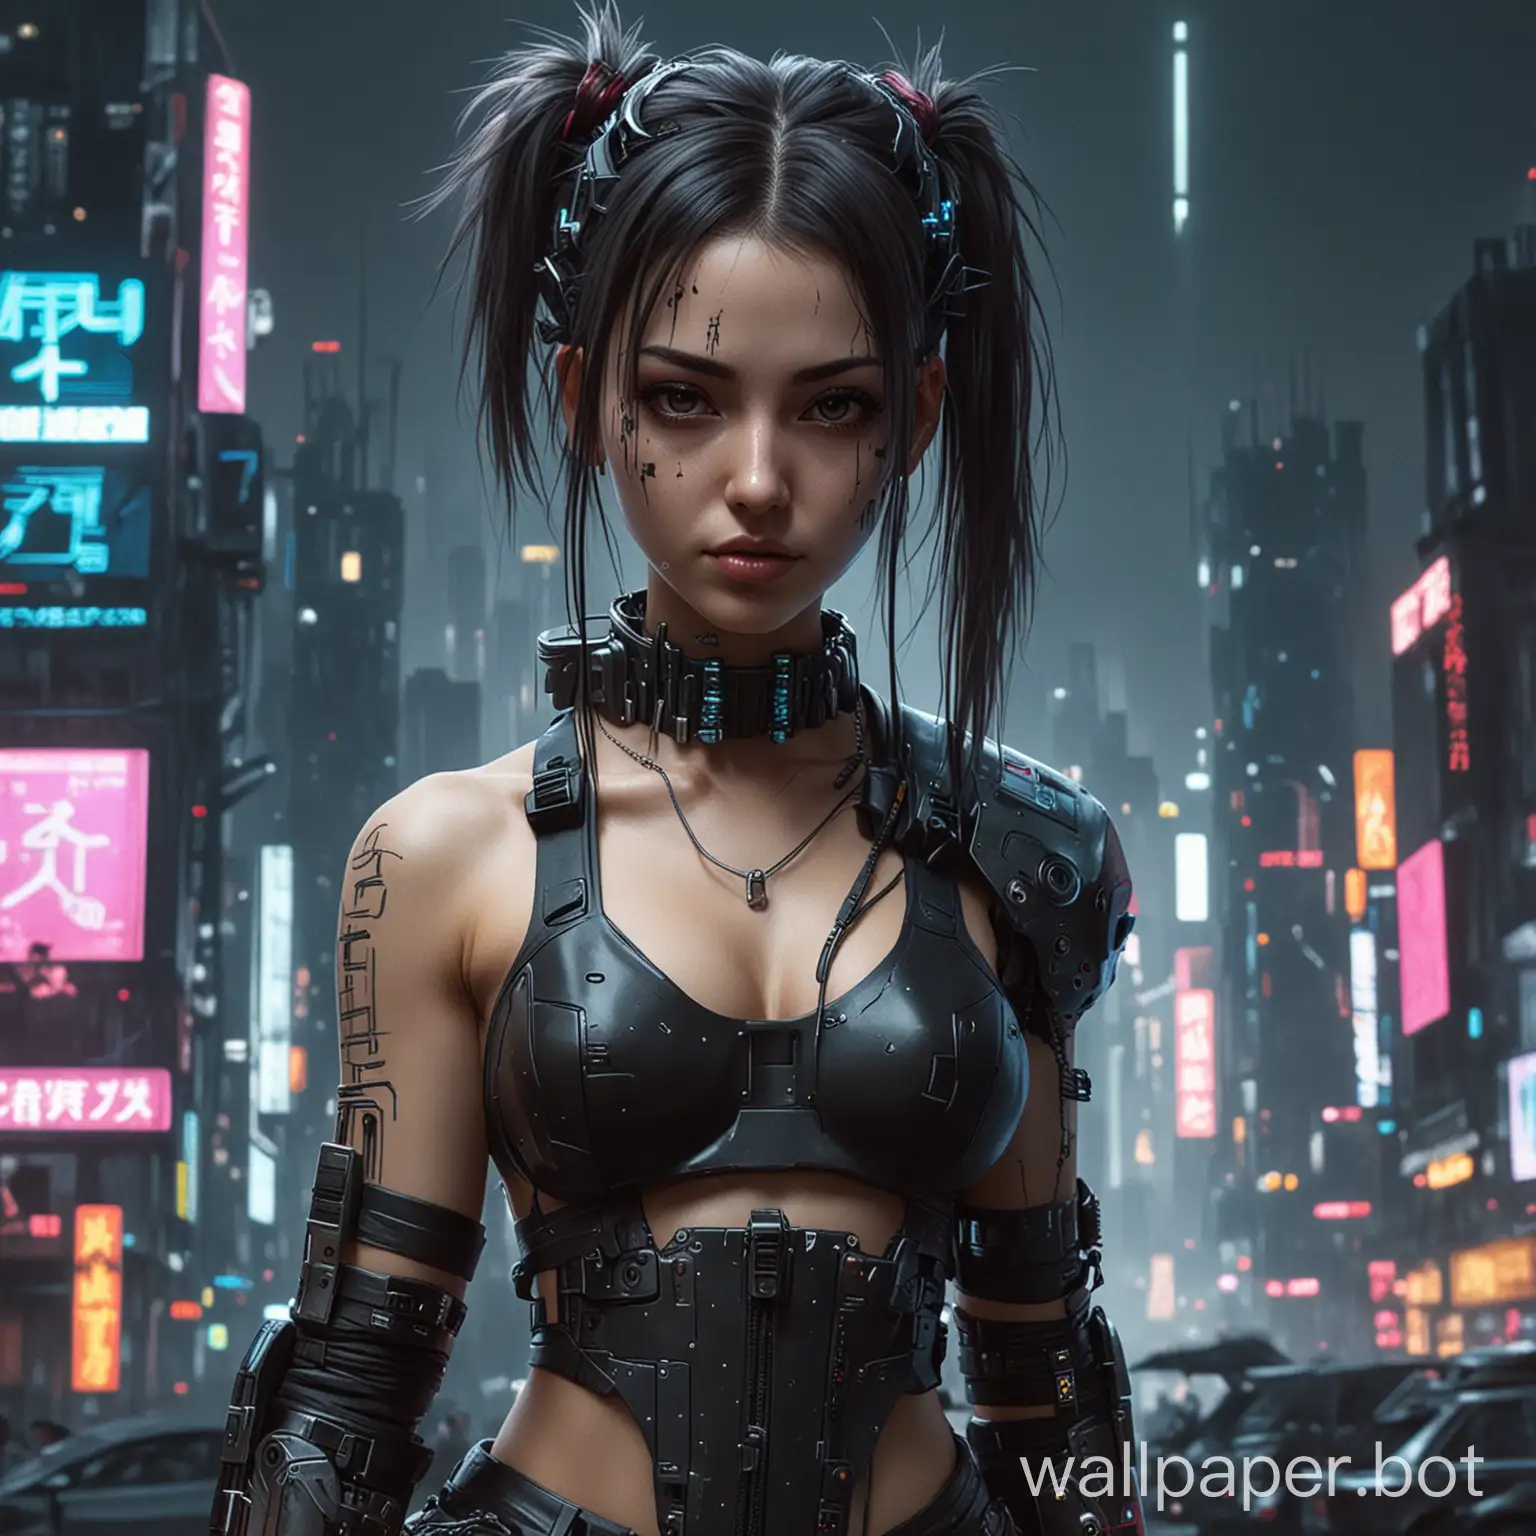 Futuristic-Cyberpunk-Girl-with-Neon-Lights